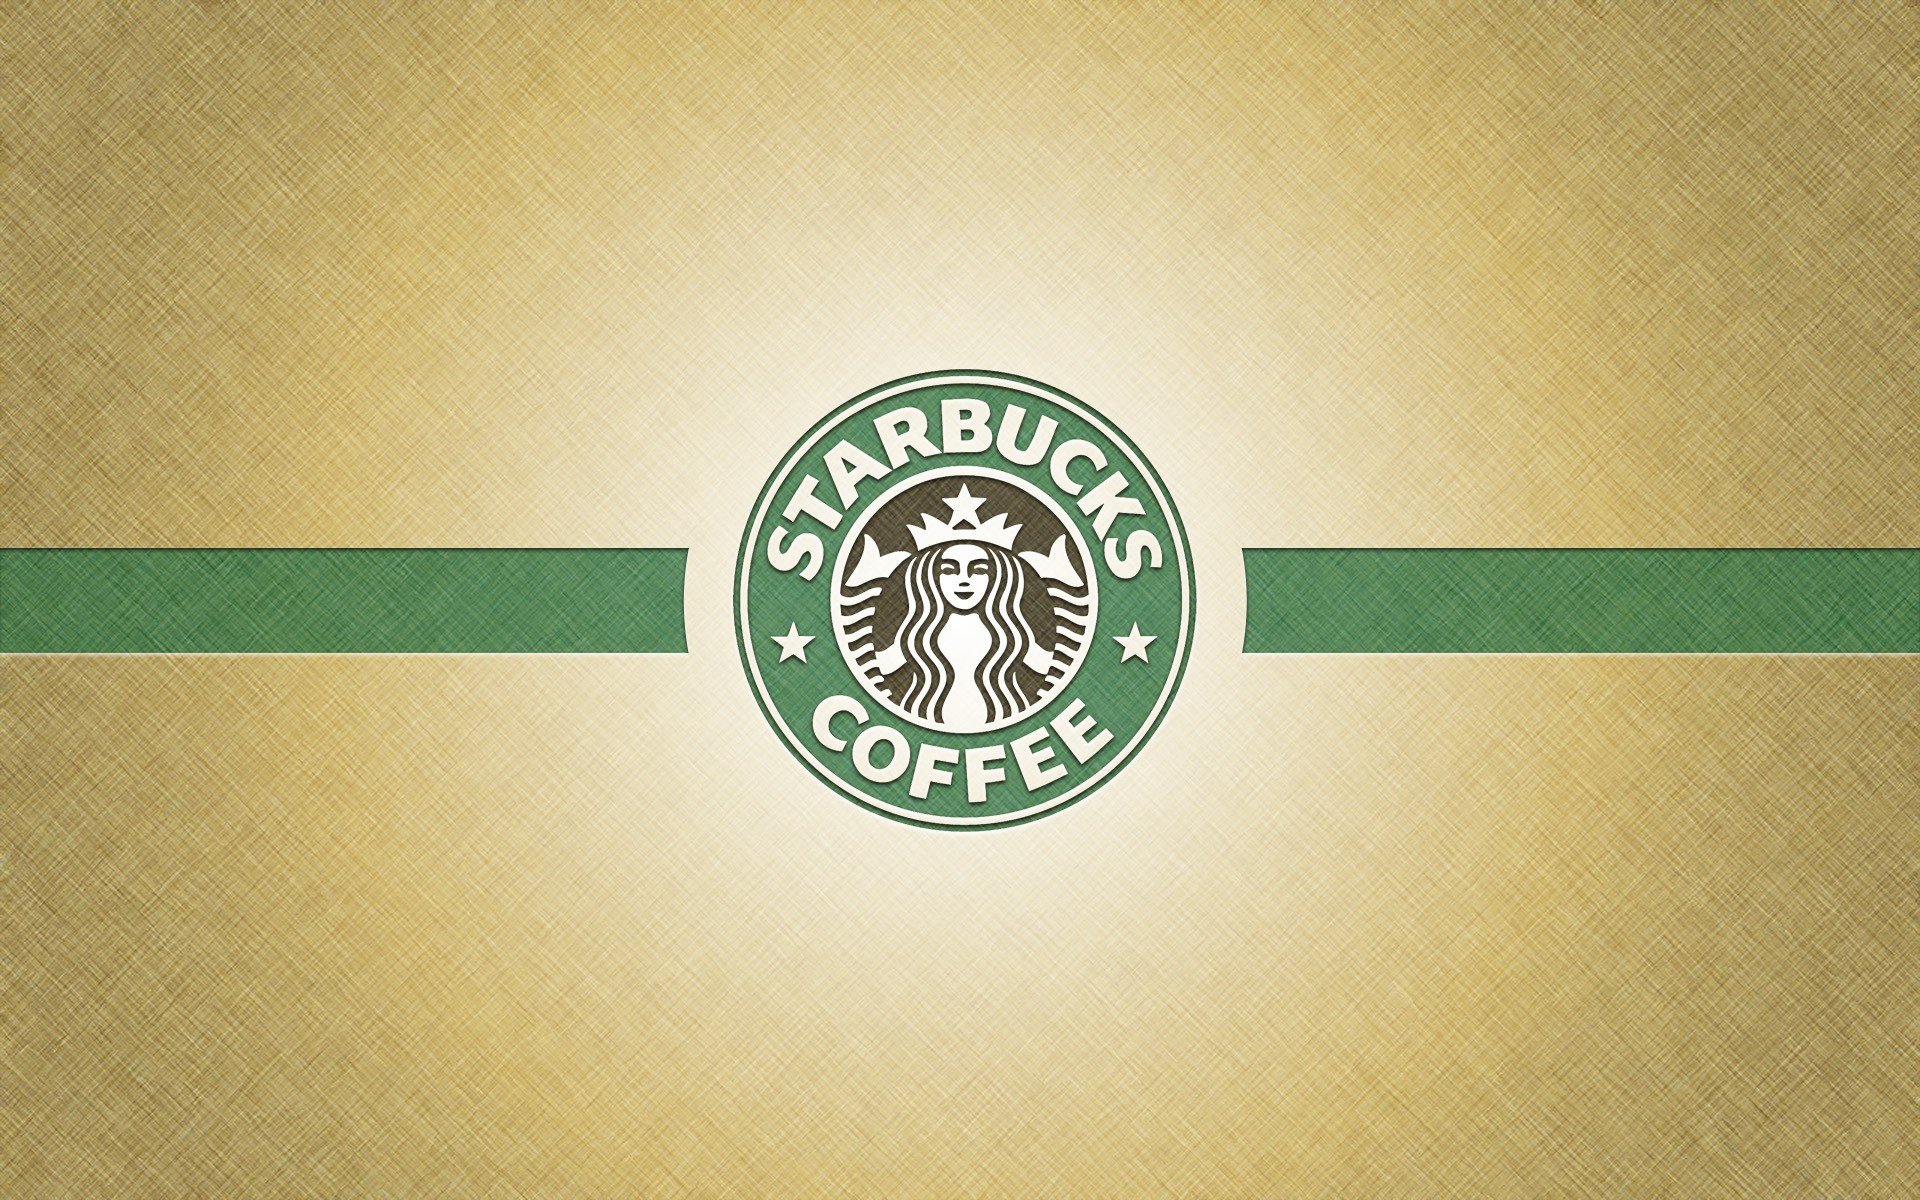 Starbucks Logos Wallpapers Hd Desktop And Mobile Backgrounds